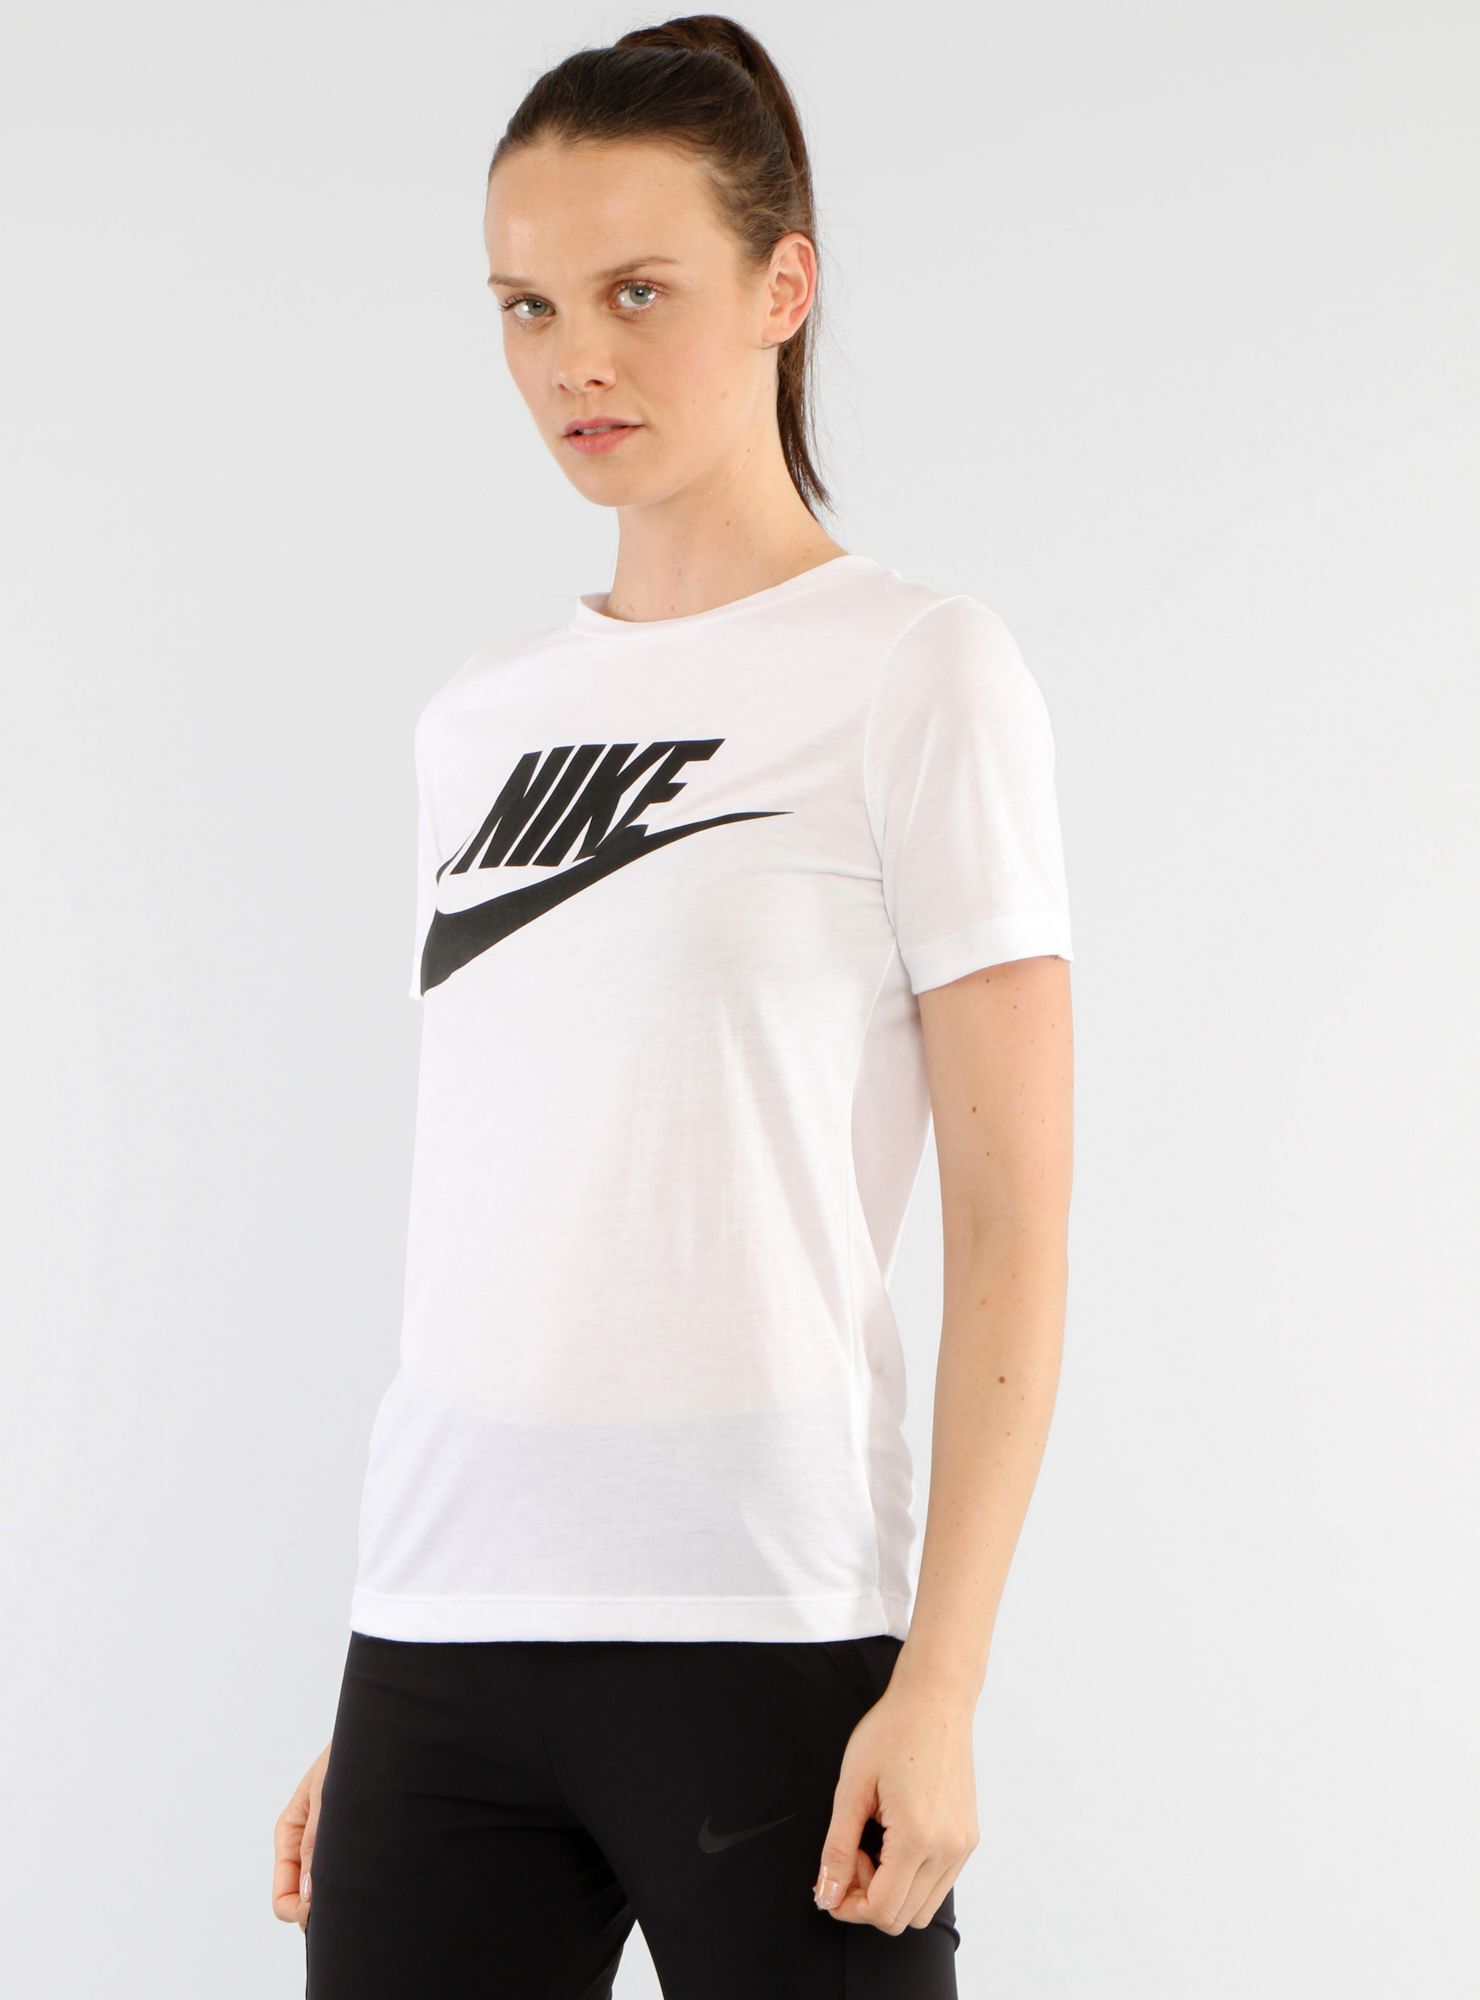 Polera Nike Deportiva Mujer Essential | Paris.cl